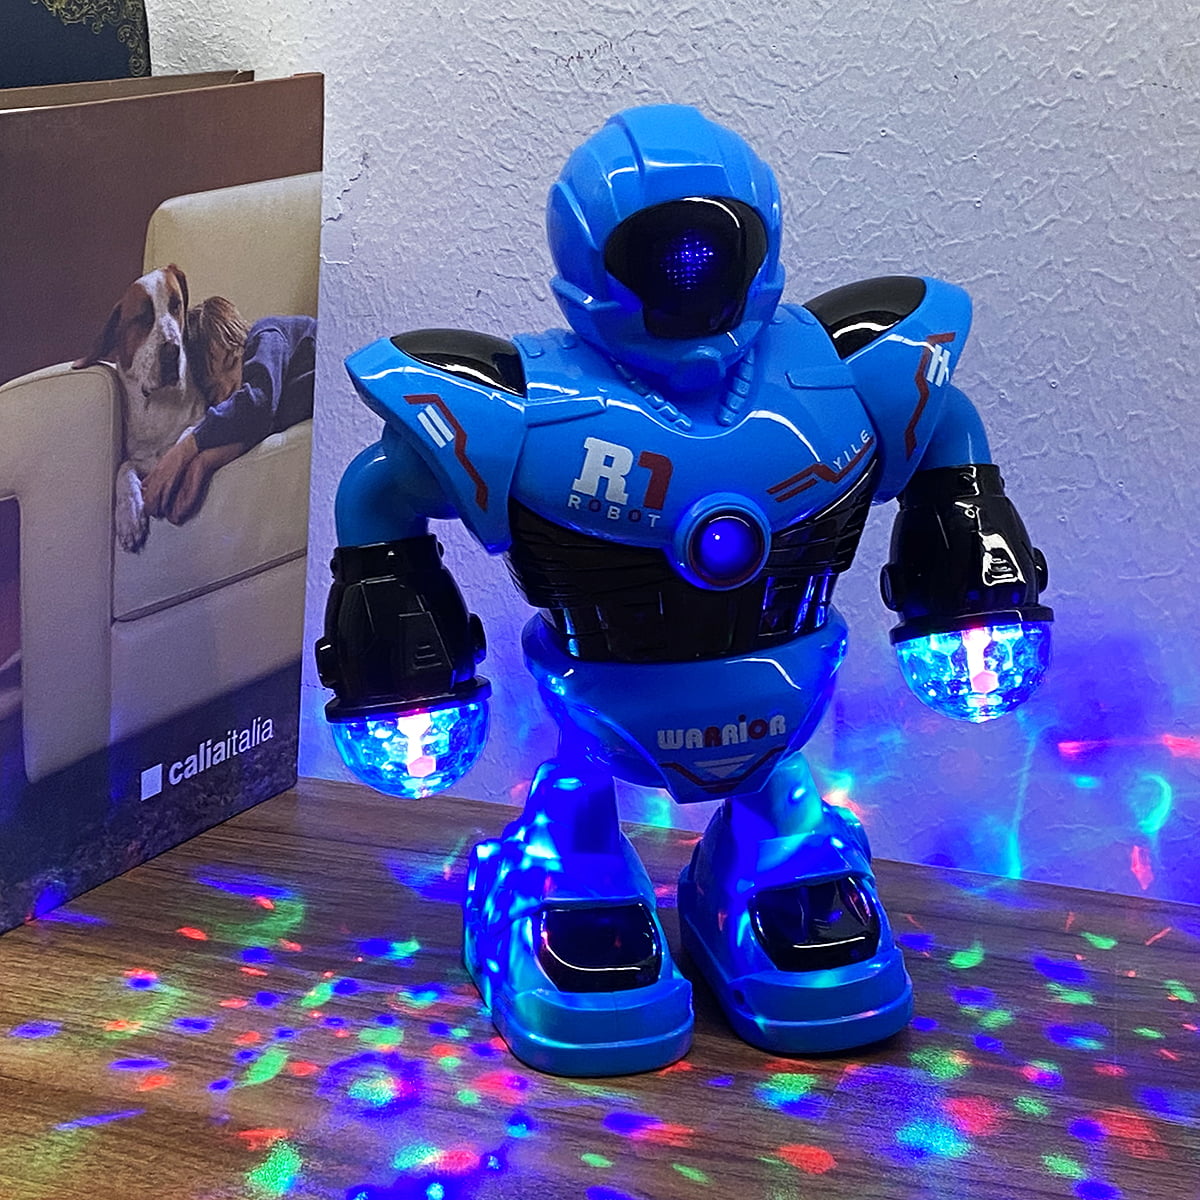 Robots Toy for Kids, Boys, Girls - Dancing Walking Robot ...